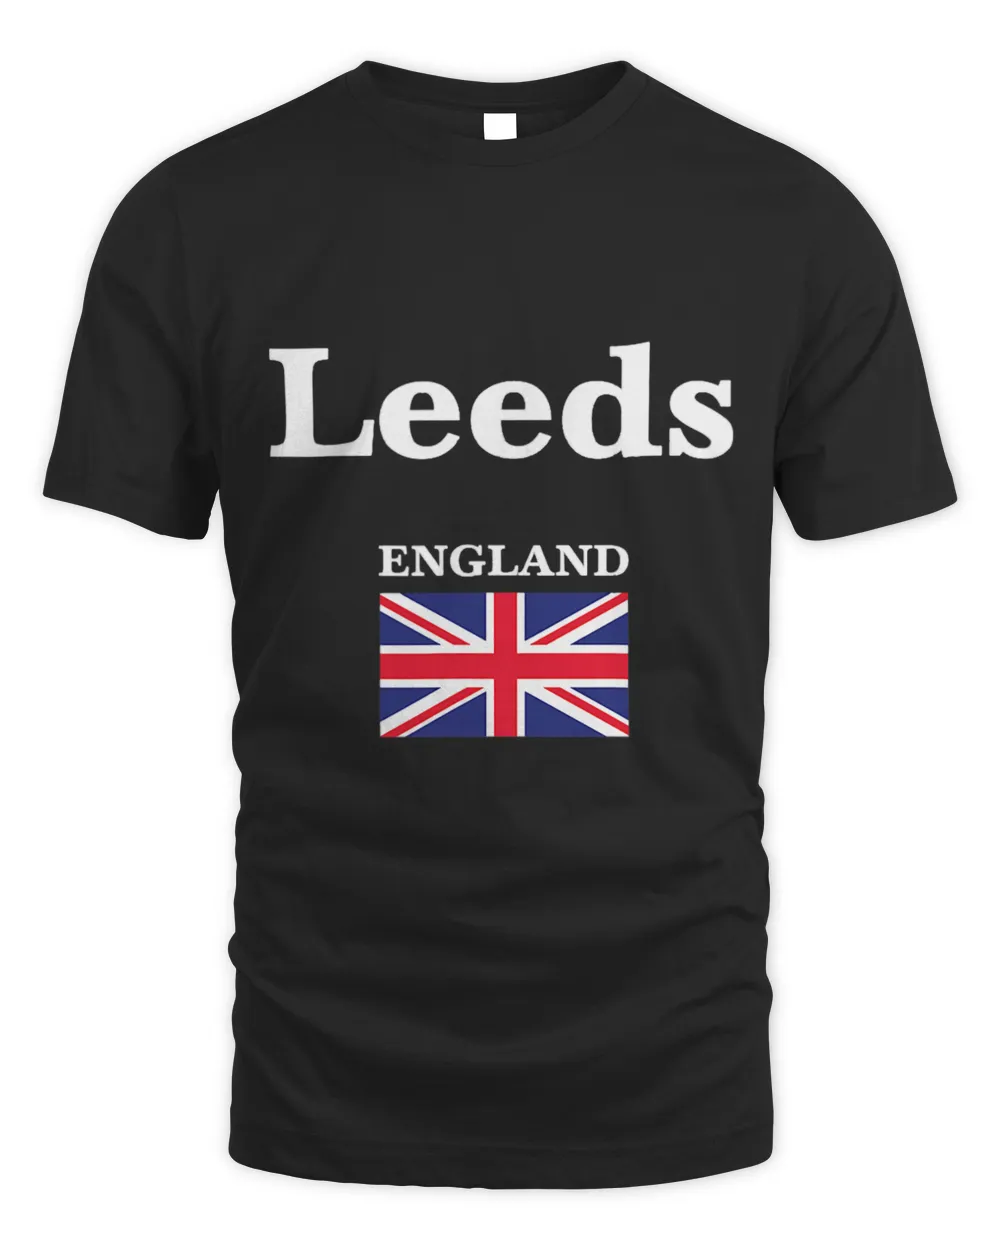 Leeds England and the Union Jack Flag of United Kingdom